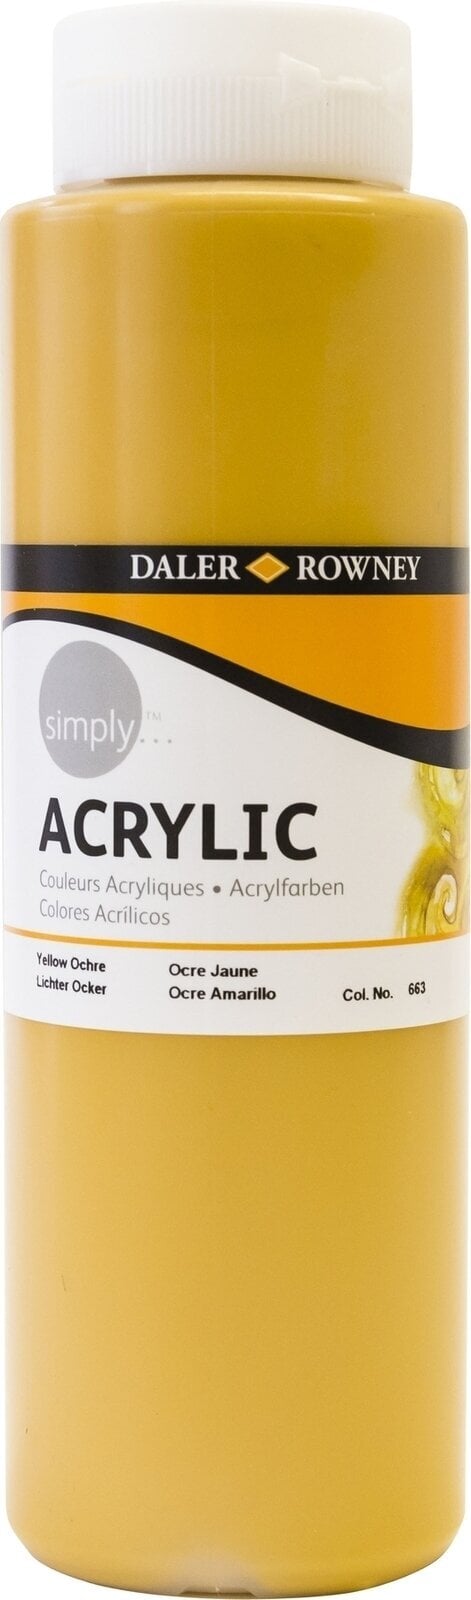 Acrylverf Daler Rowney Simply Acrylverf Yellow Ochre 750 ml 1 stuk